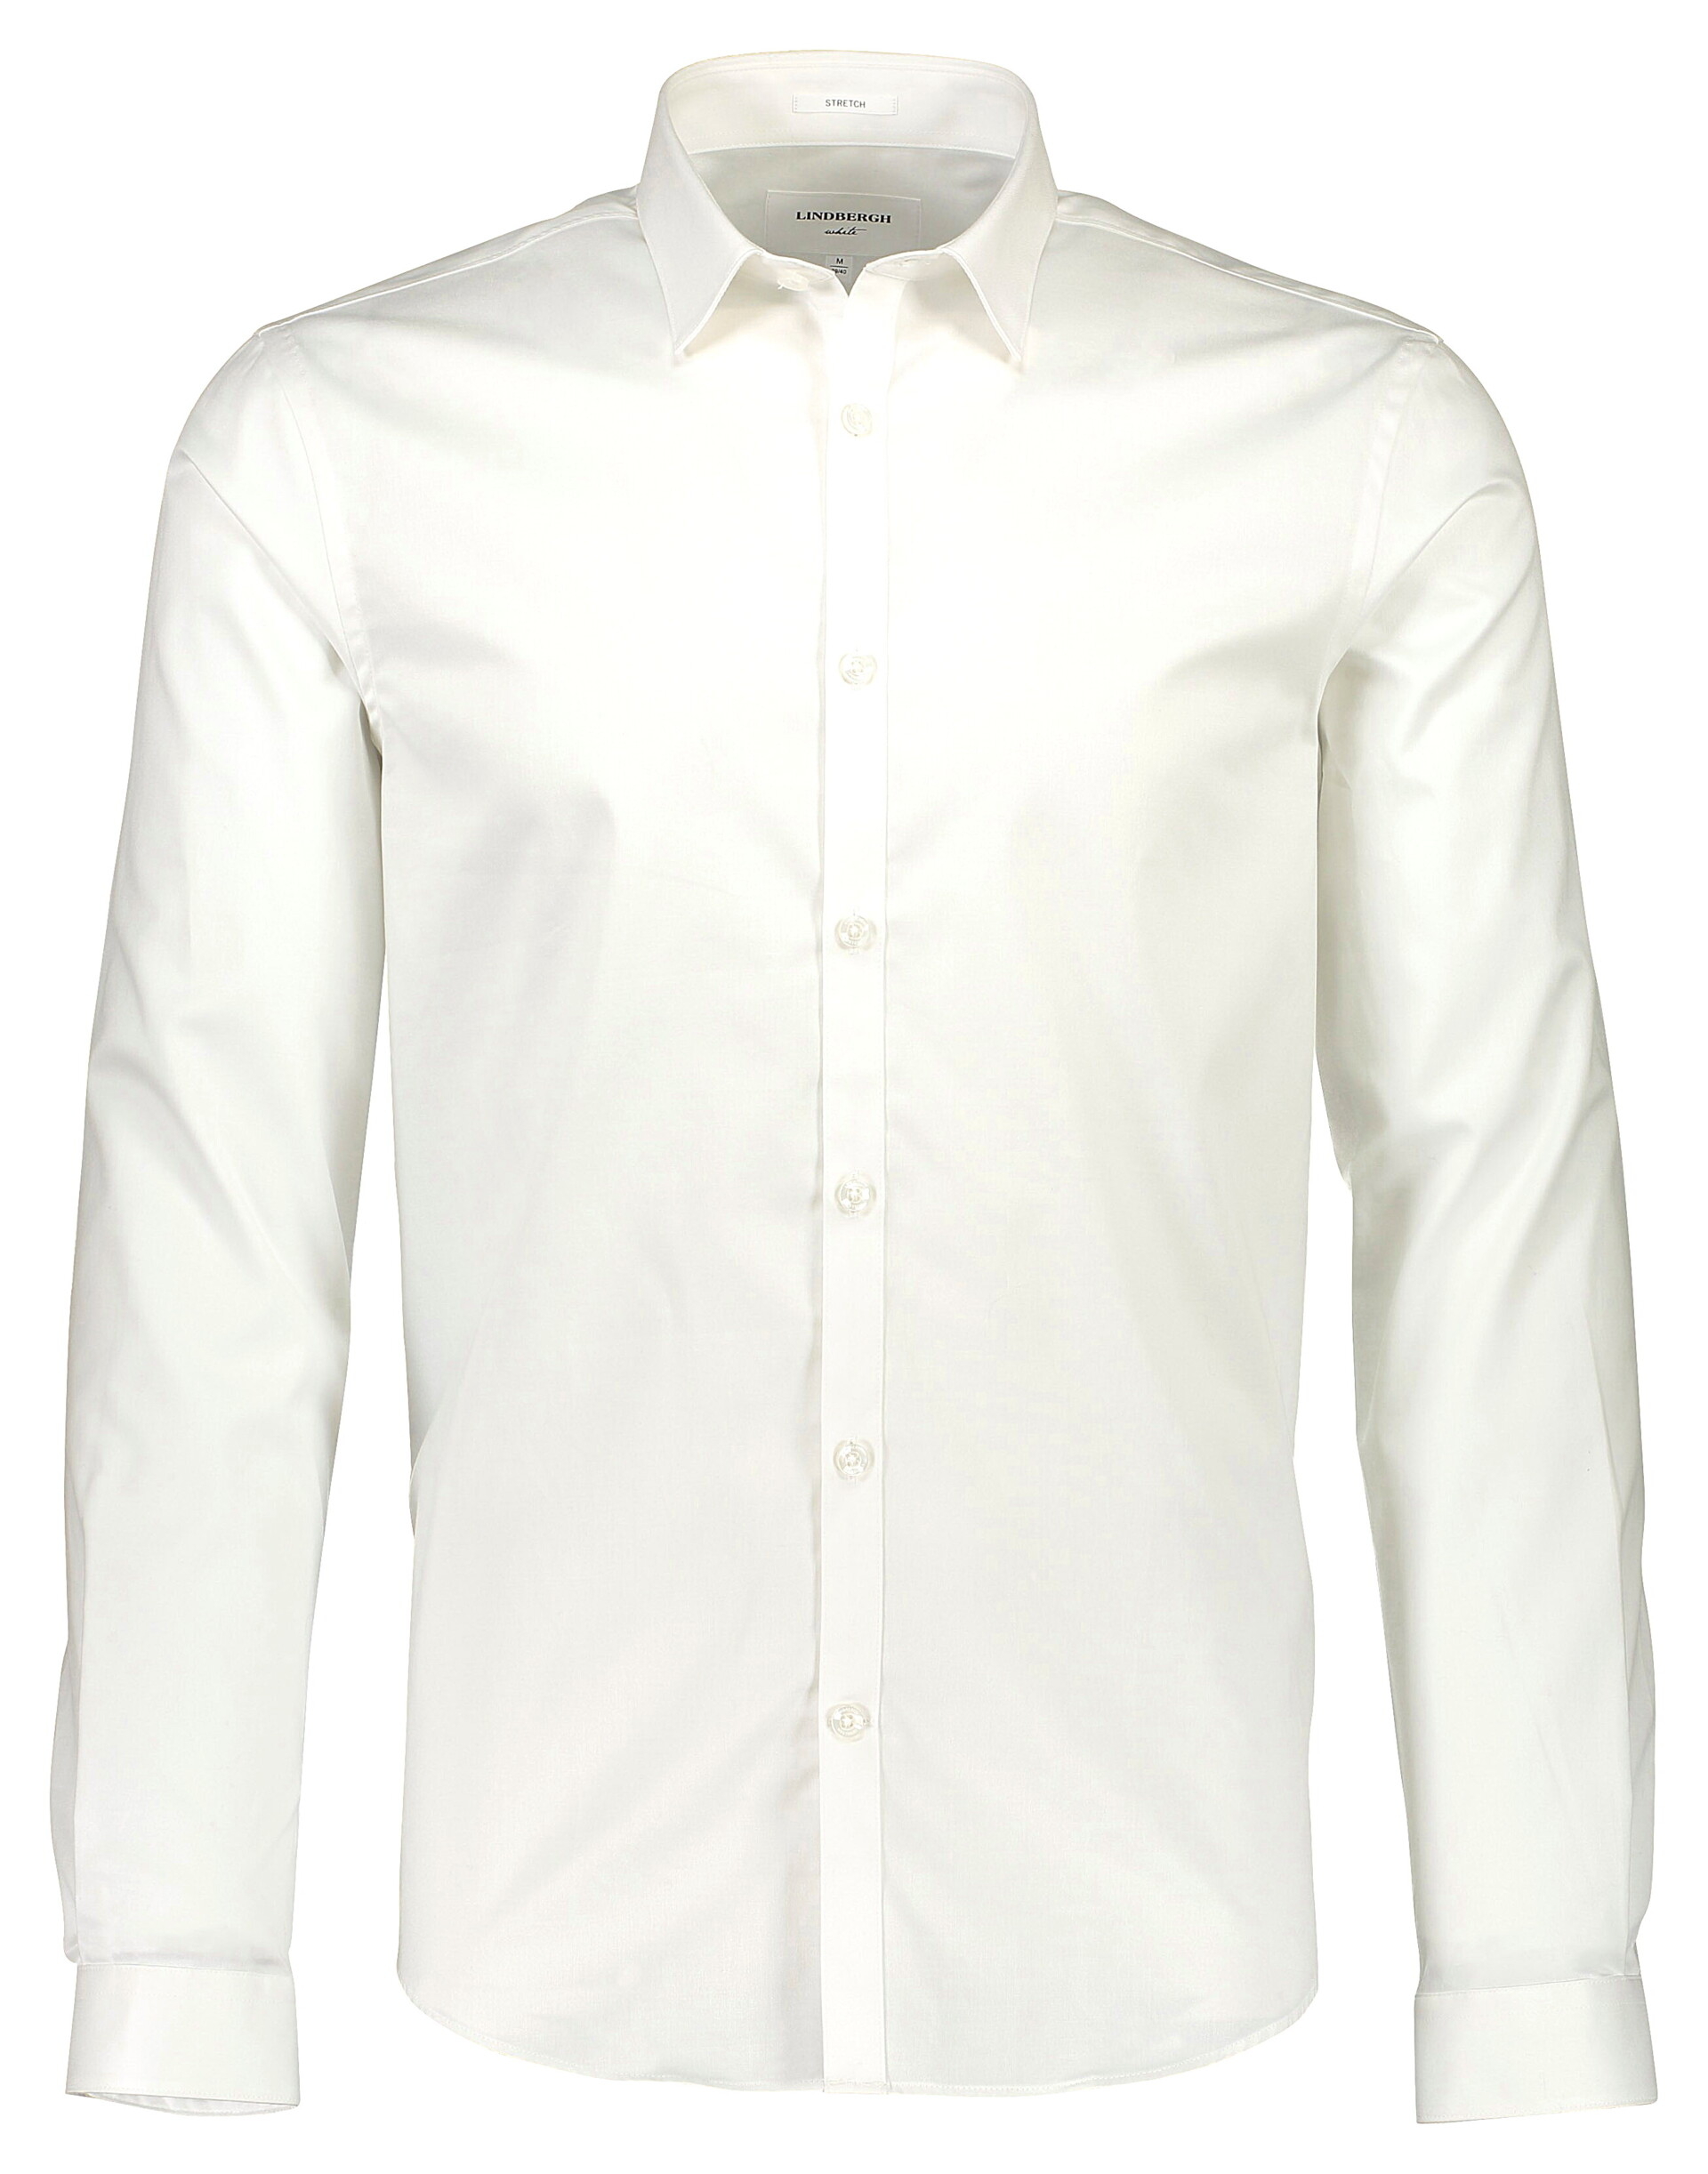 Lindbergh Business shirt white / white